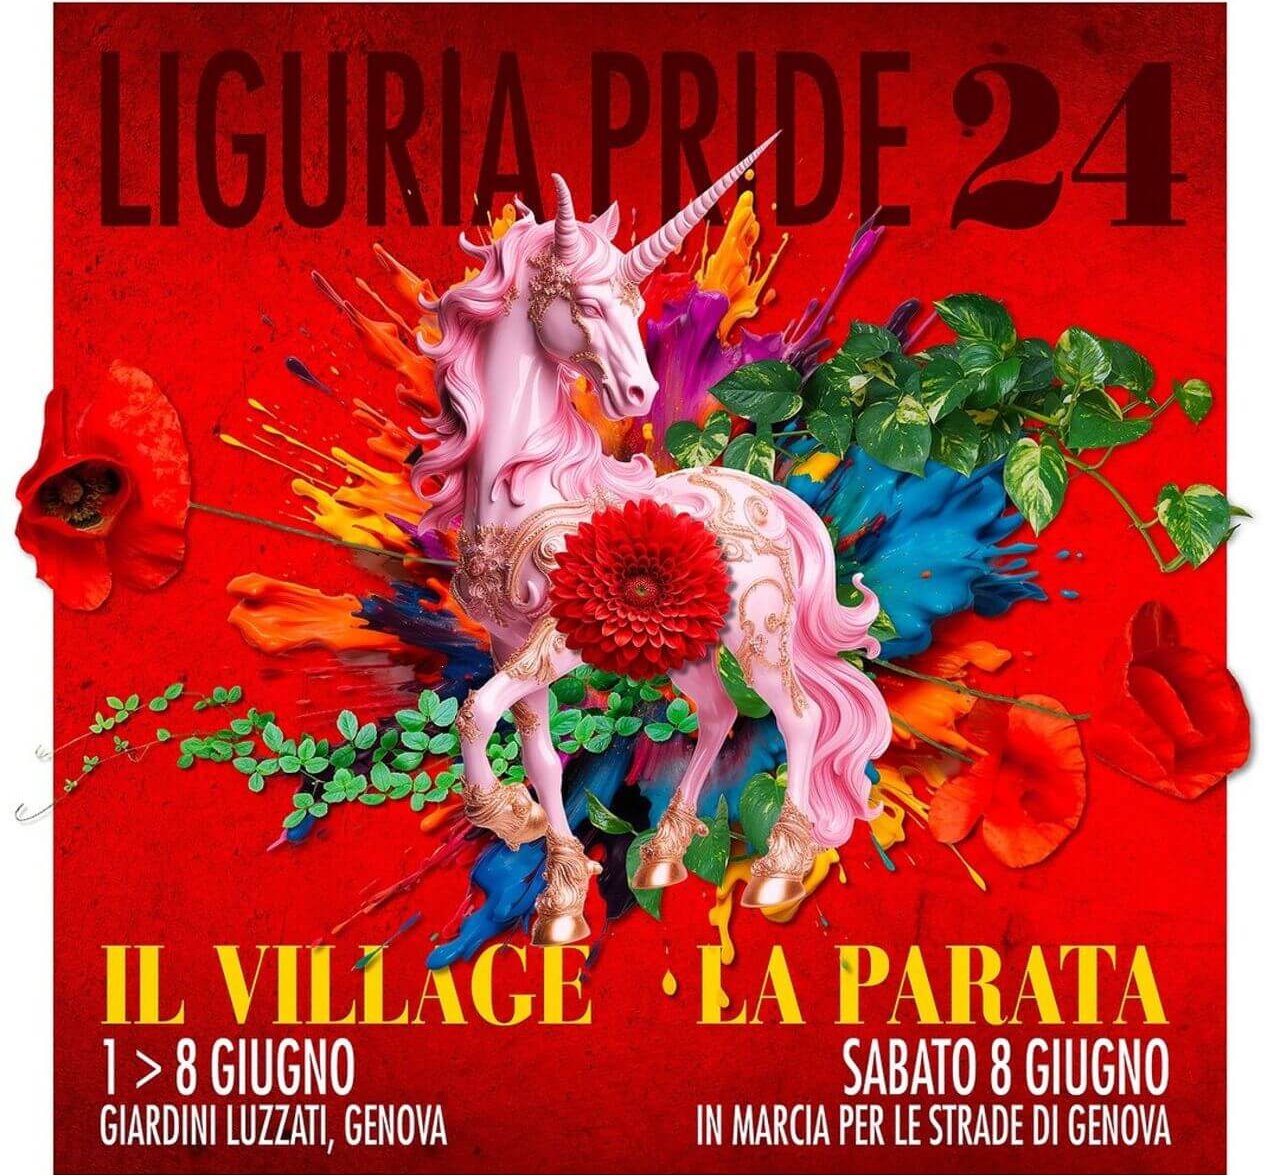 liguria pride 2024, l'8 giugno a Genova